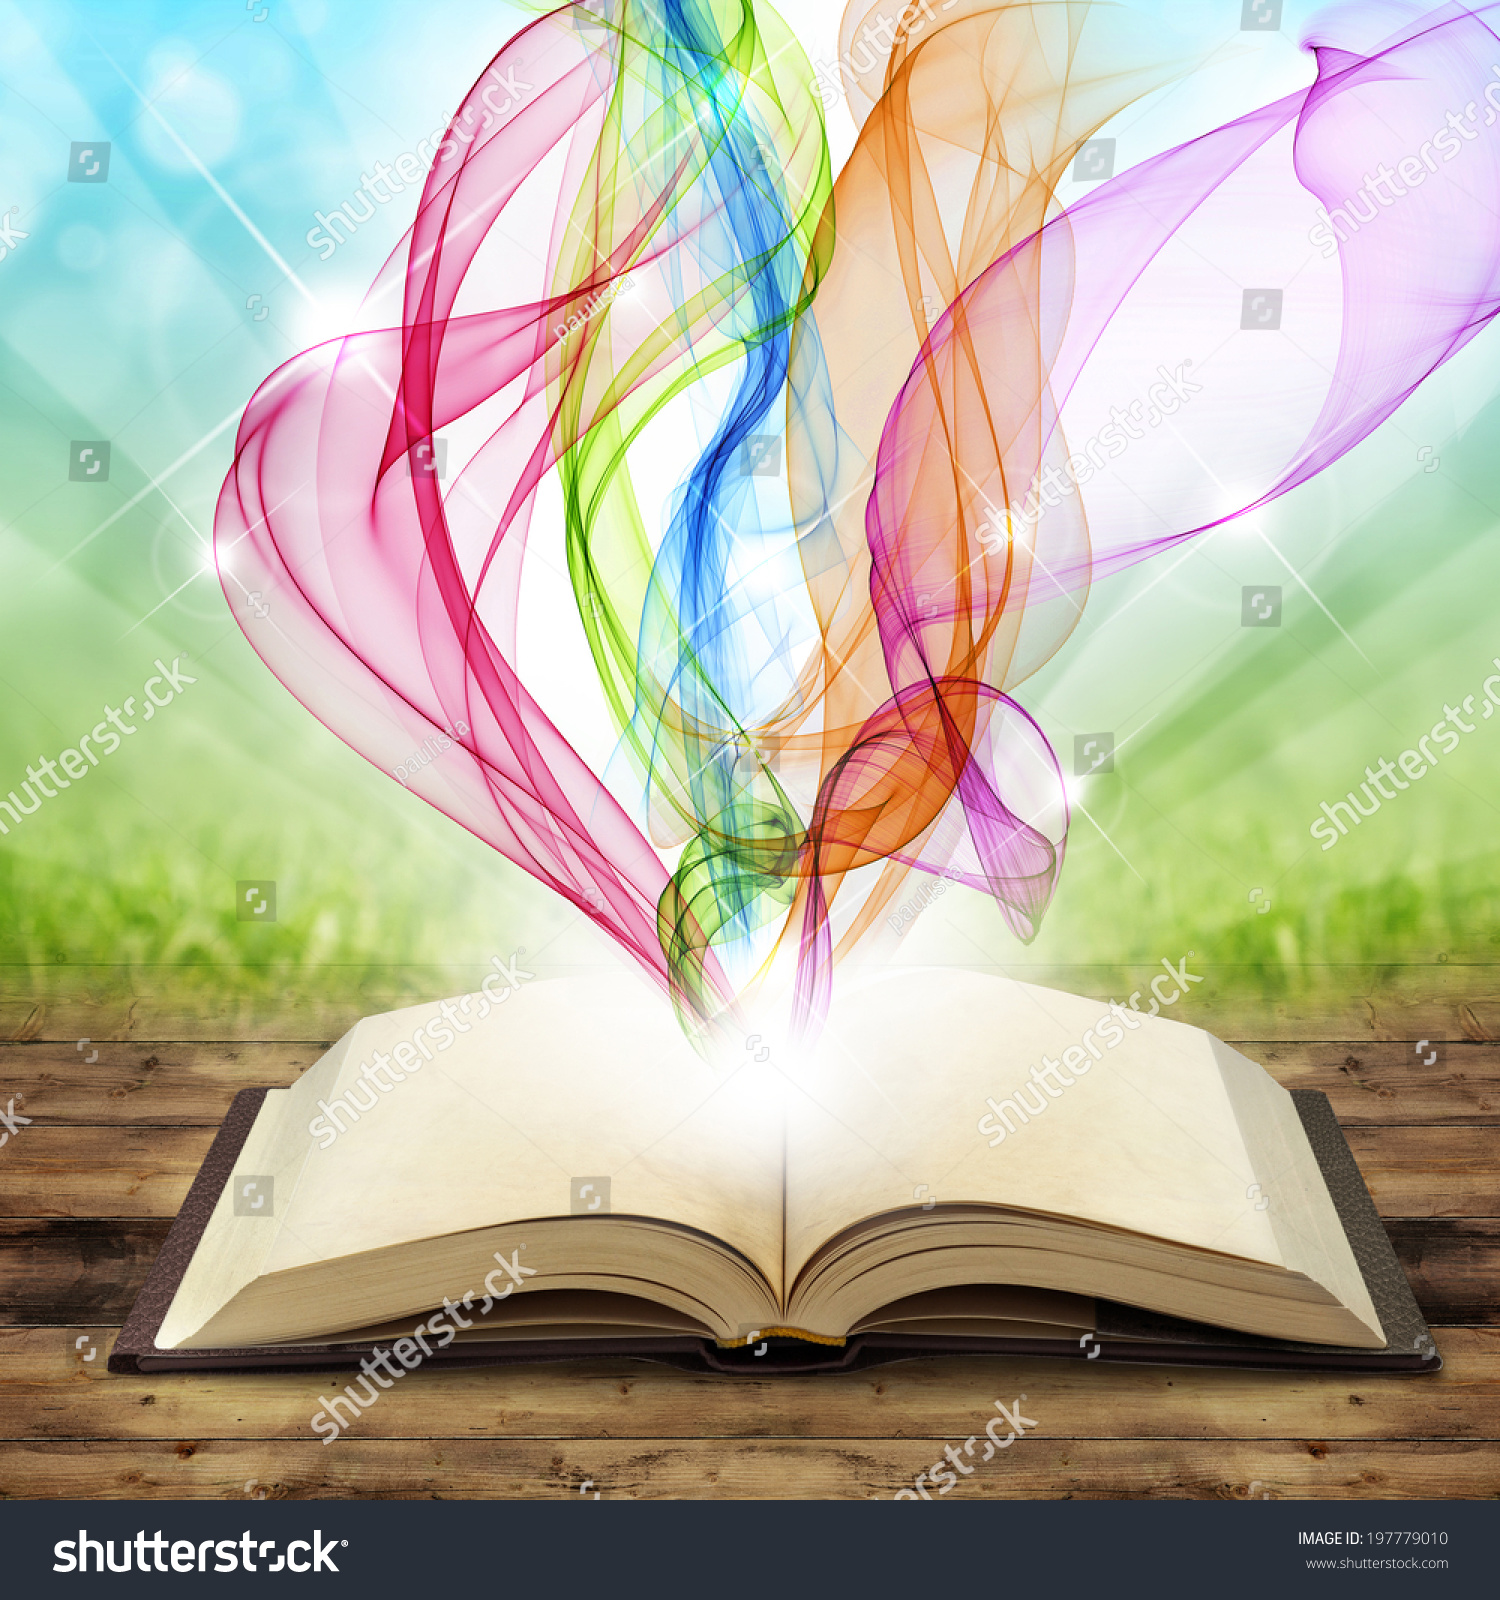 Open Book Colored Smoke Swirls Twirls Stock Photo 197779010 Shutterstock